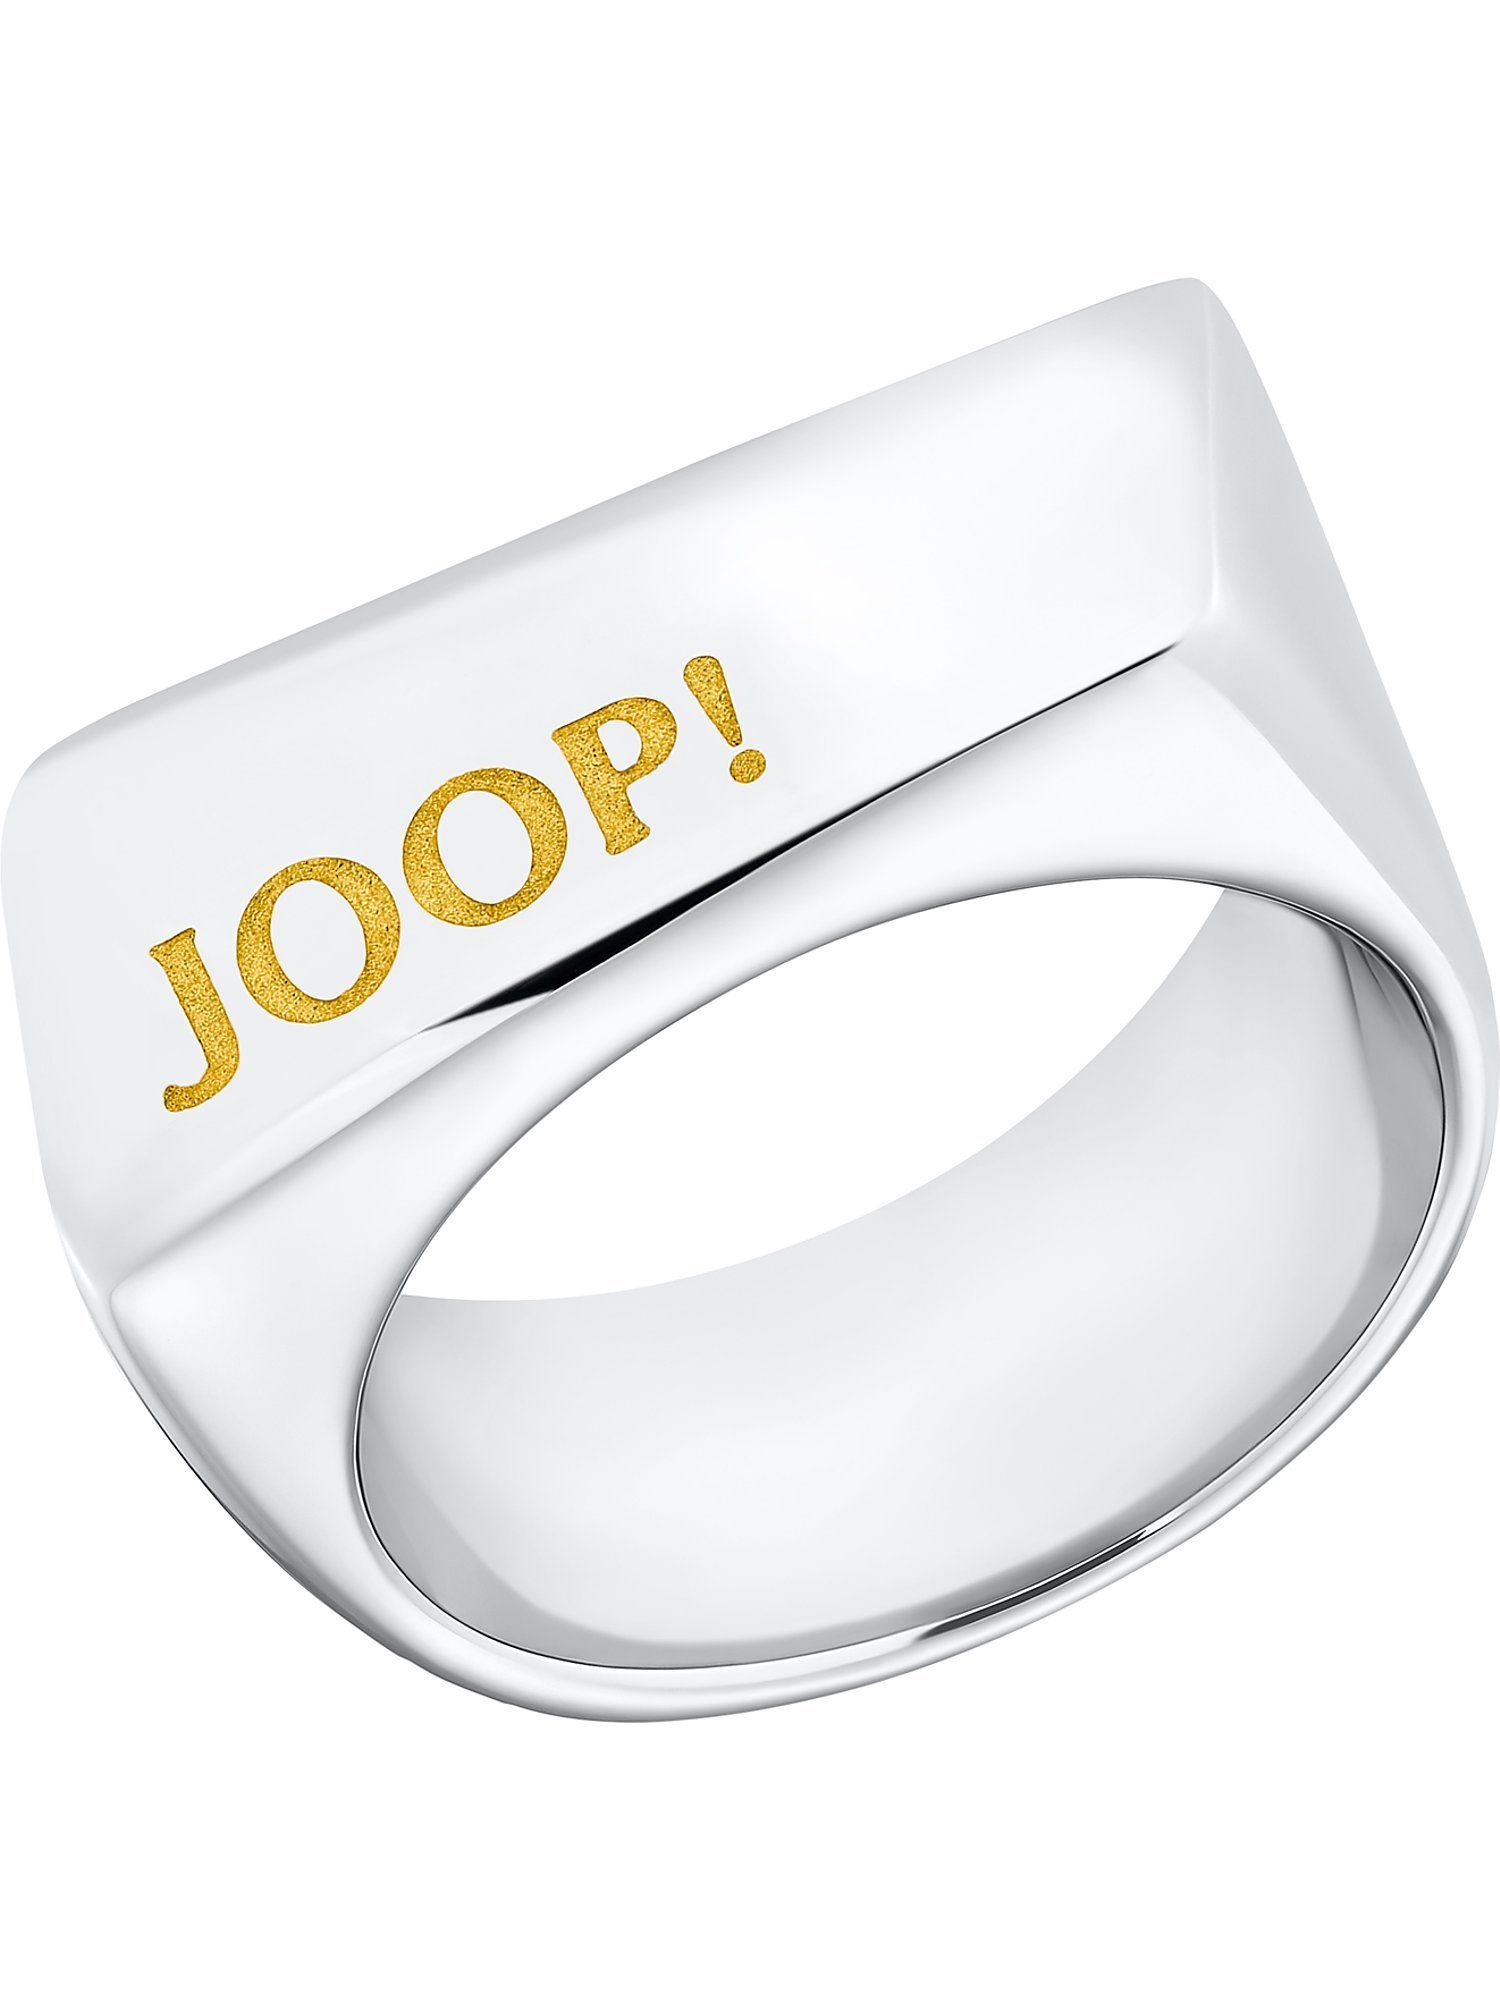 Joop! Fingerring 2034882/-83/-84/-85, Edelstahl